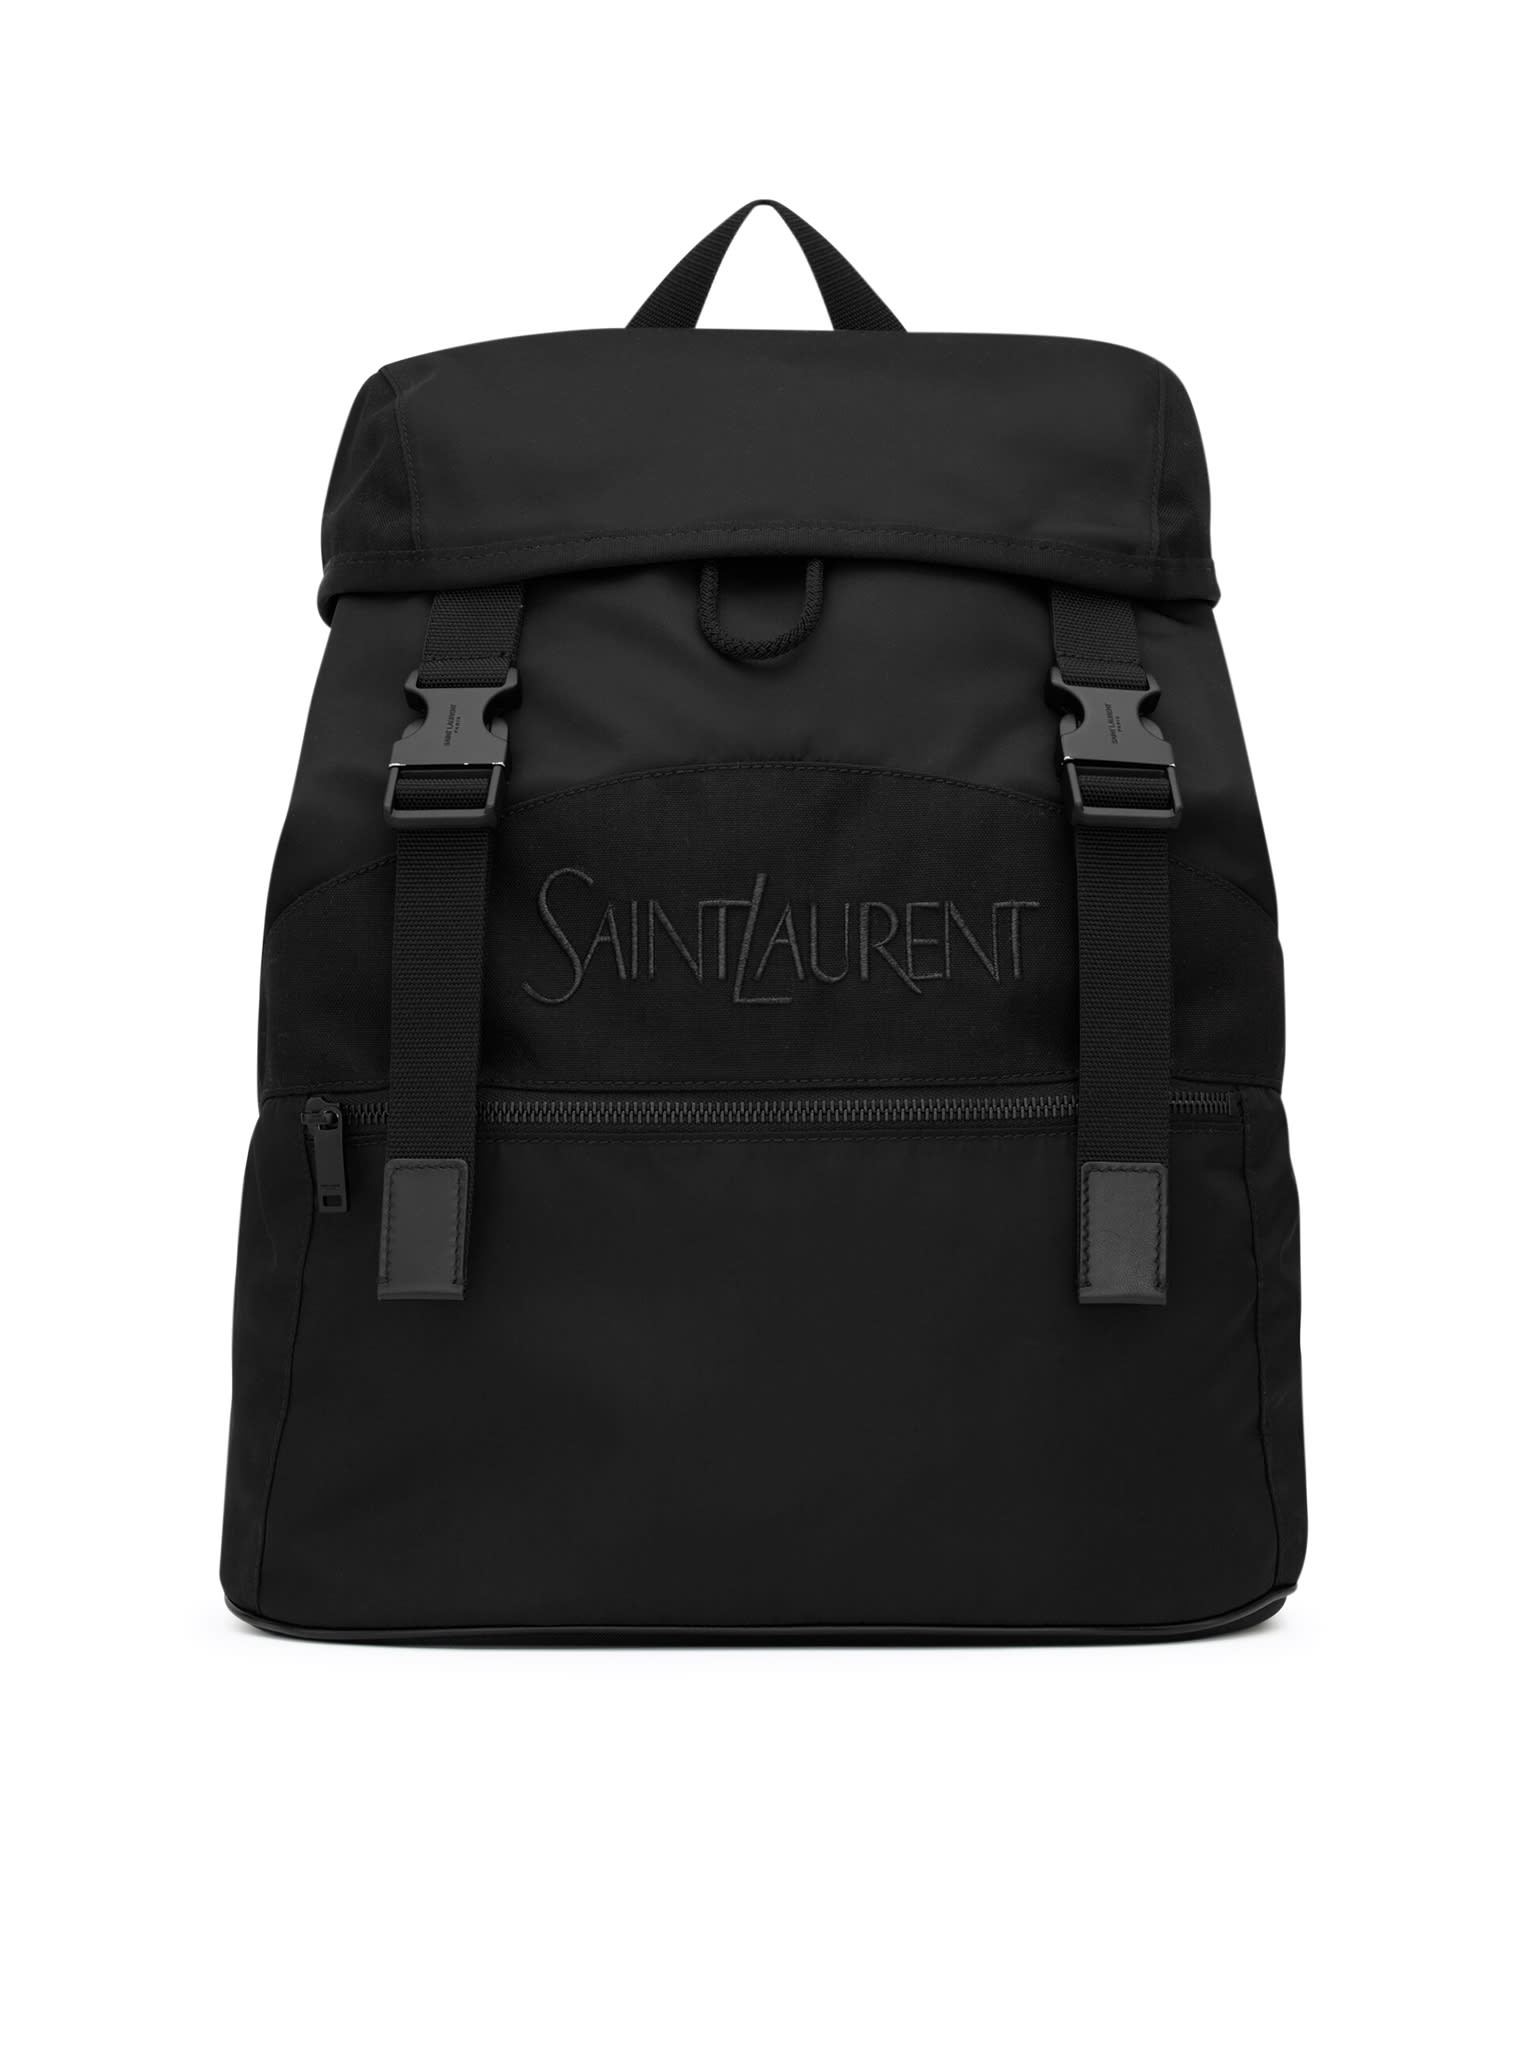 Saint Laurent Ysl Bag New Backpack In Black